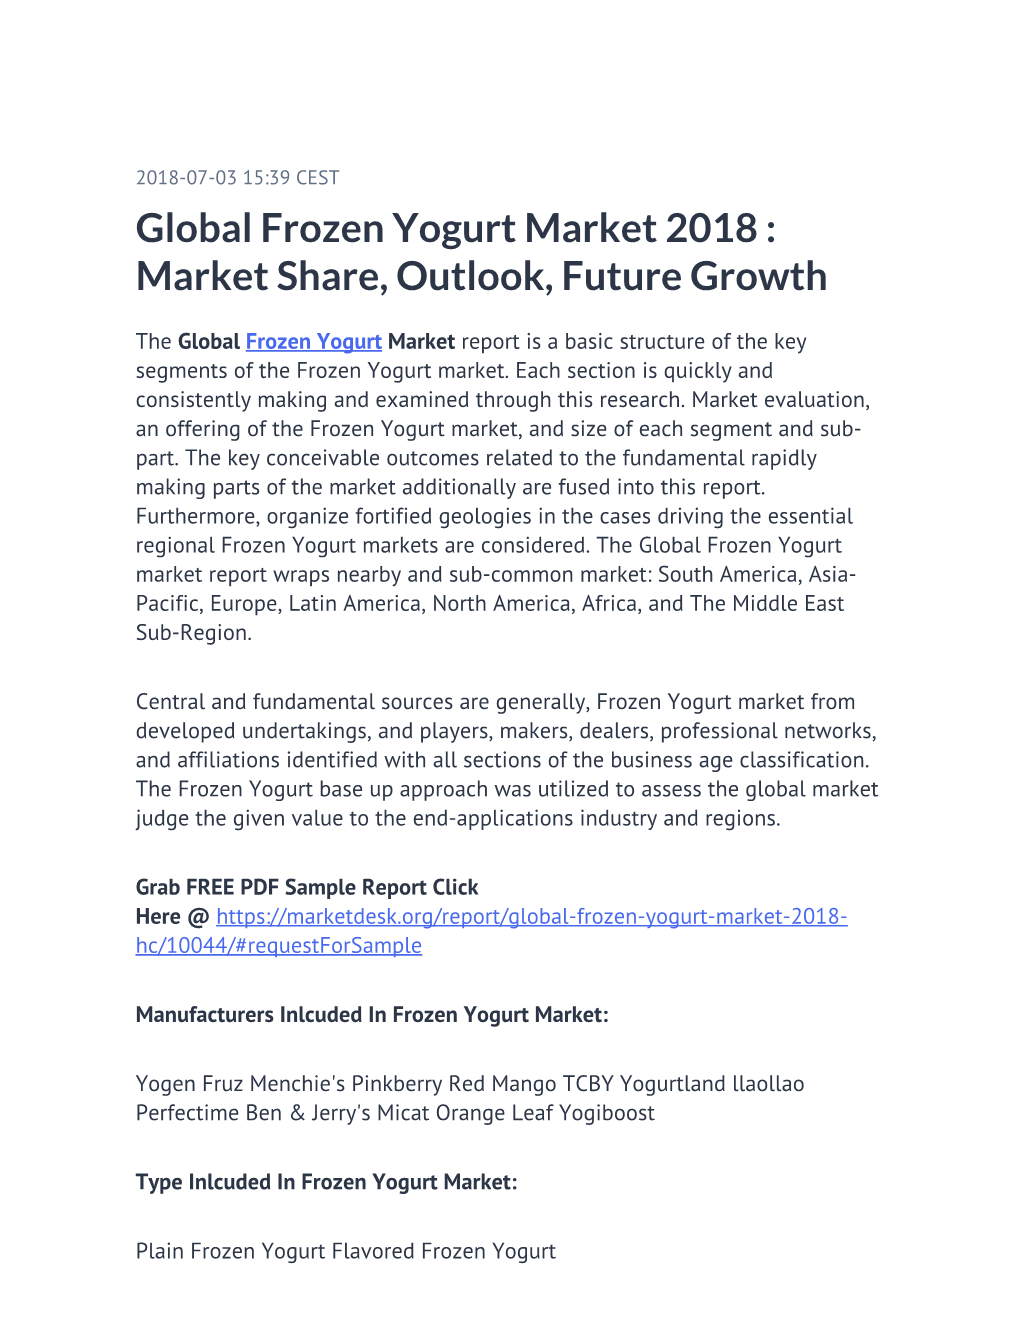 Global Frozen Yogurt Market 2018 : Market Share, Outlook, Future Growth